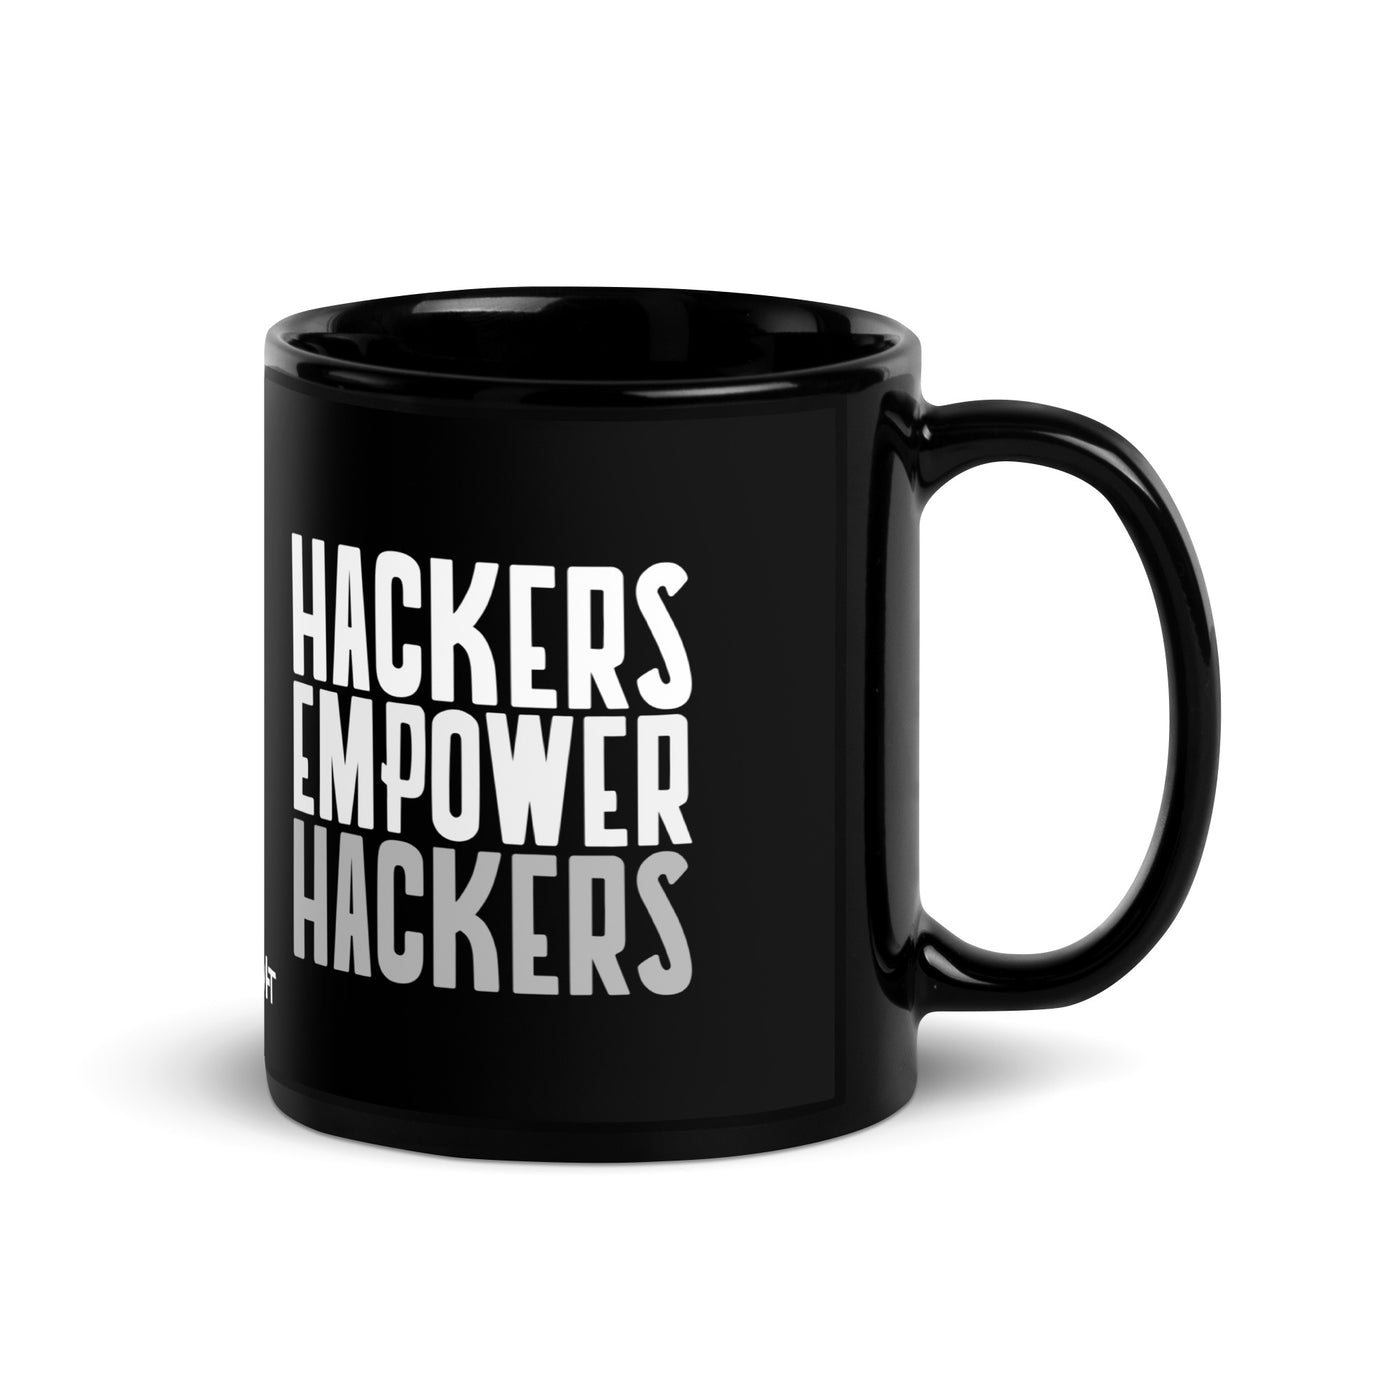 Hackers Empower Hackers - Black Glossy Mug